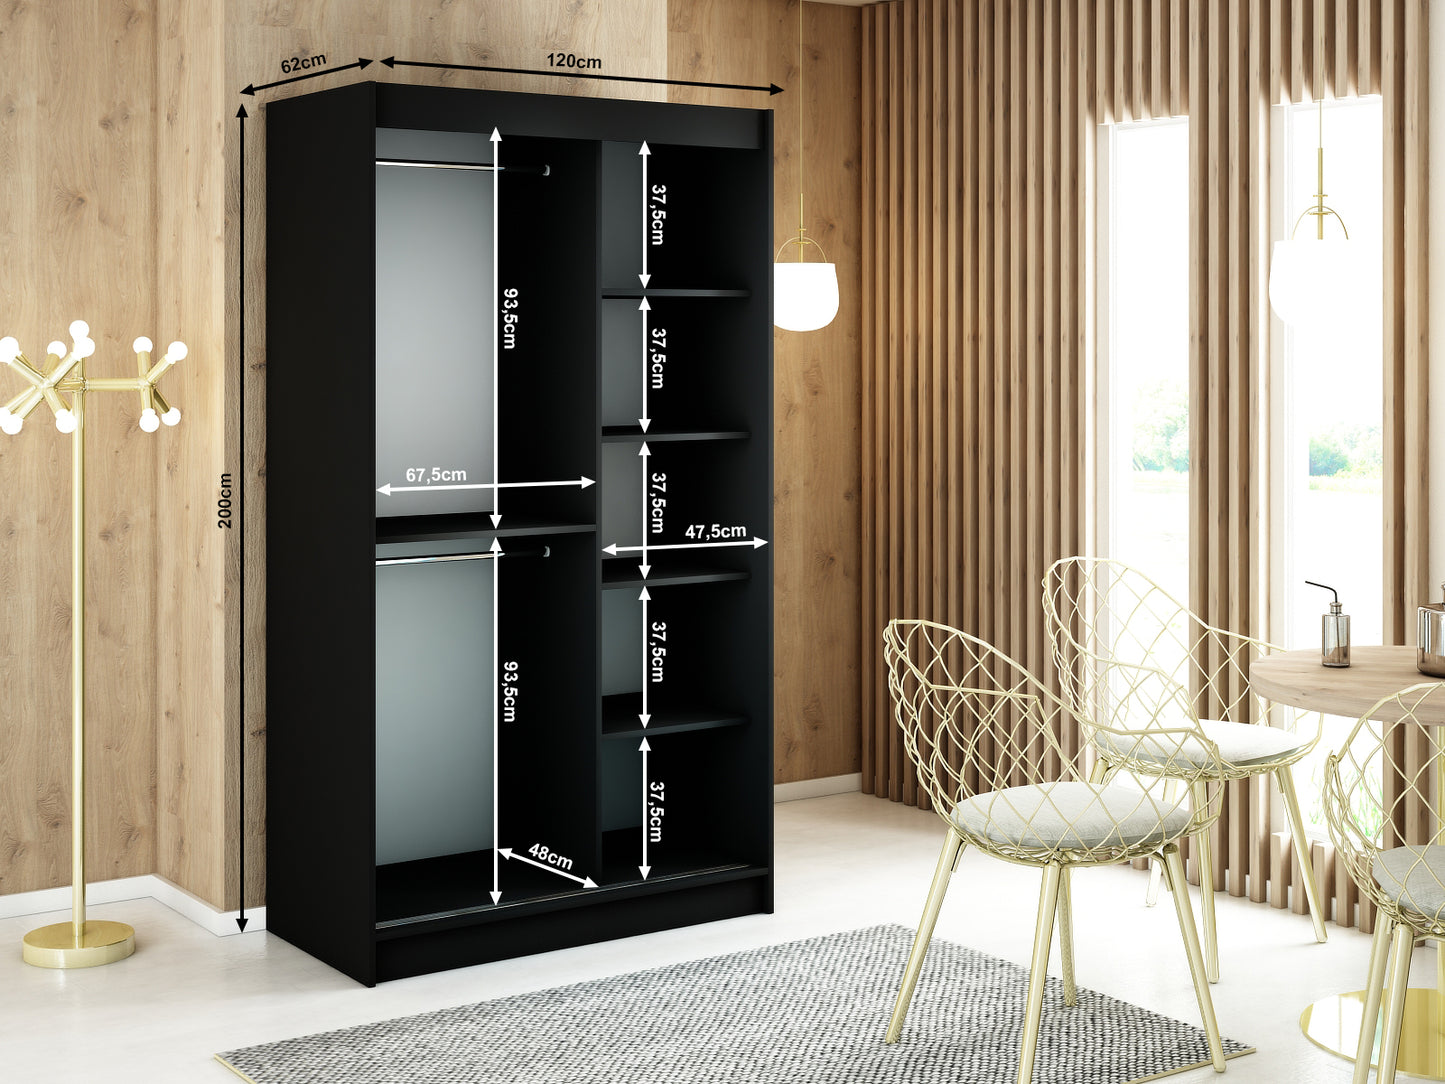 MALI V2 - Sliding Wardrobe Black with Mirror Gold Details Shelves Rails Drawers Optional >120cm<